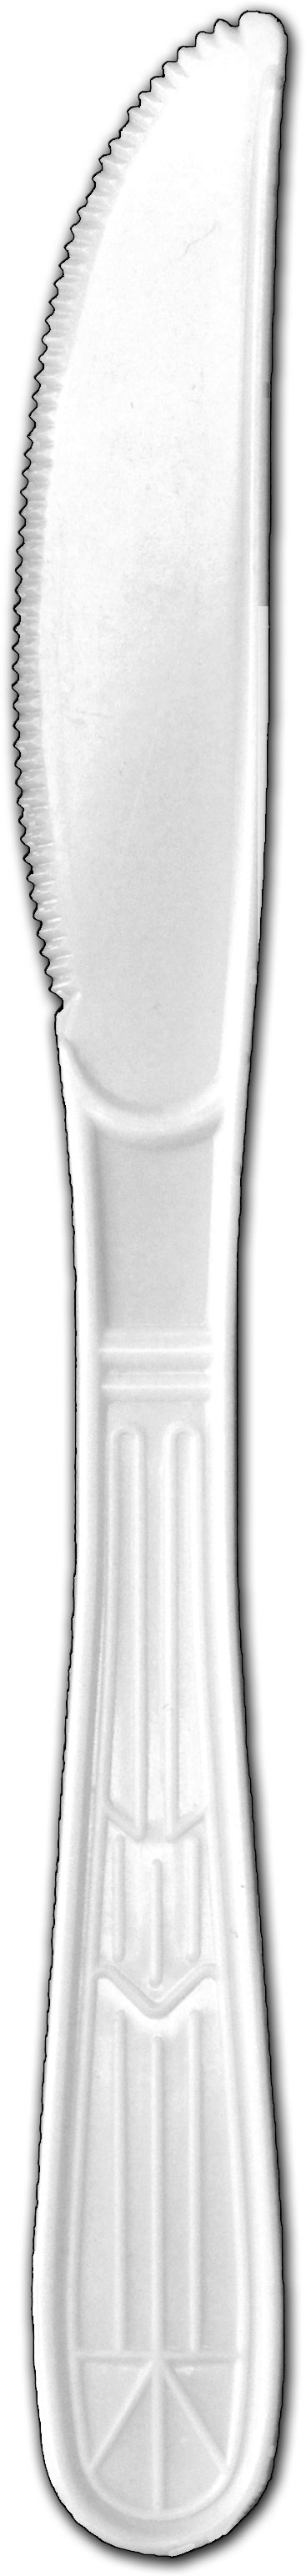 KNIFE HEAVY WHITE POLYPROPYLENE 1000 (P3505W)